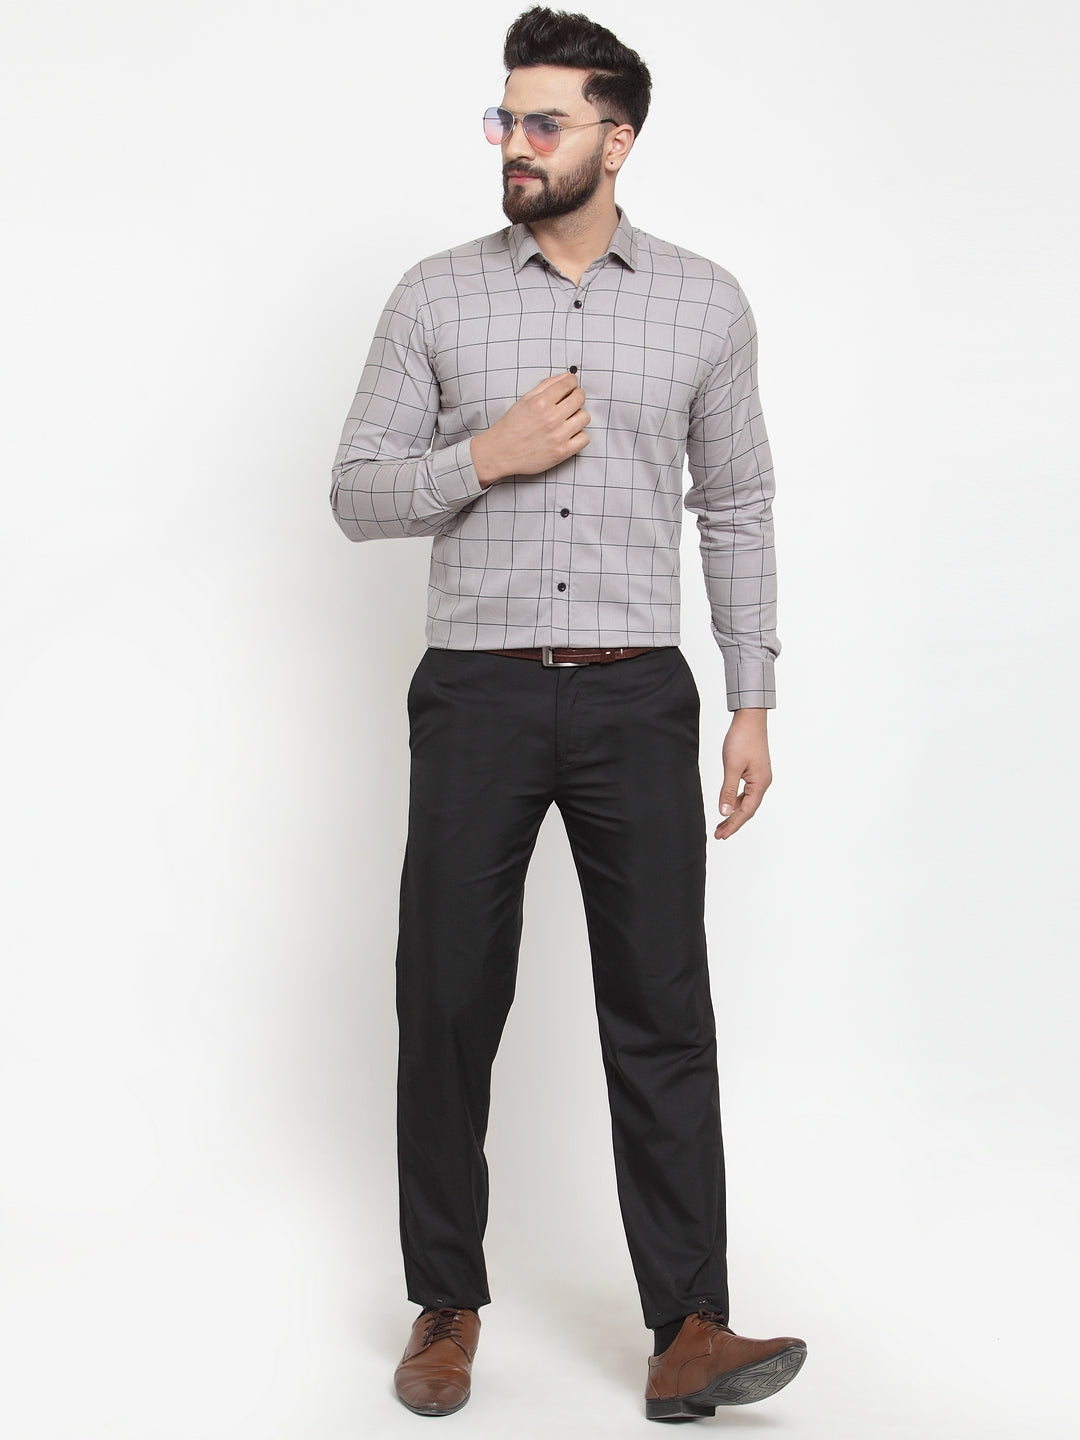 Men's Grey Cotton Checked Formal Shirts ( SF 742Grey ) - Jainish